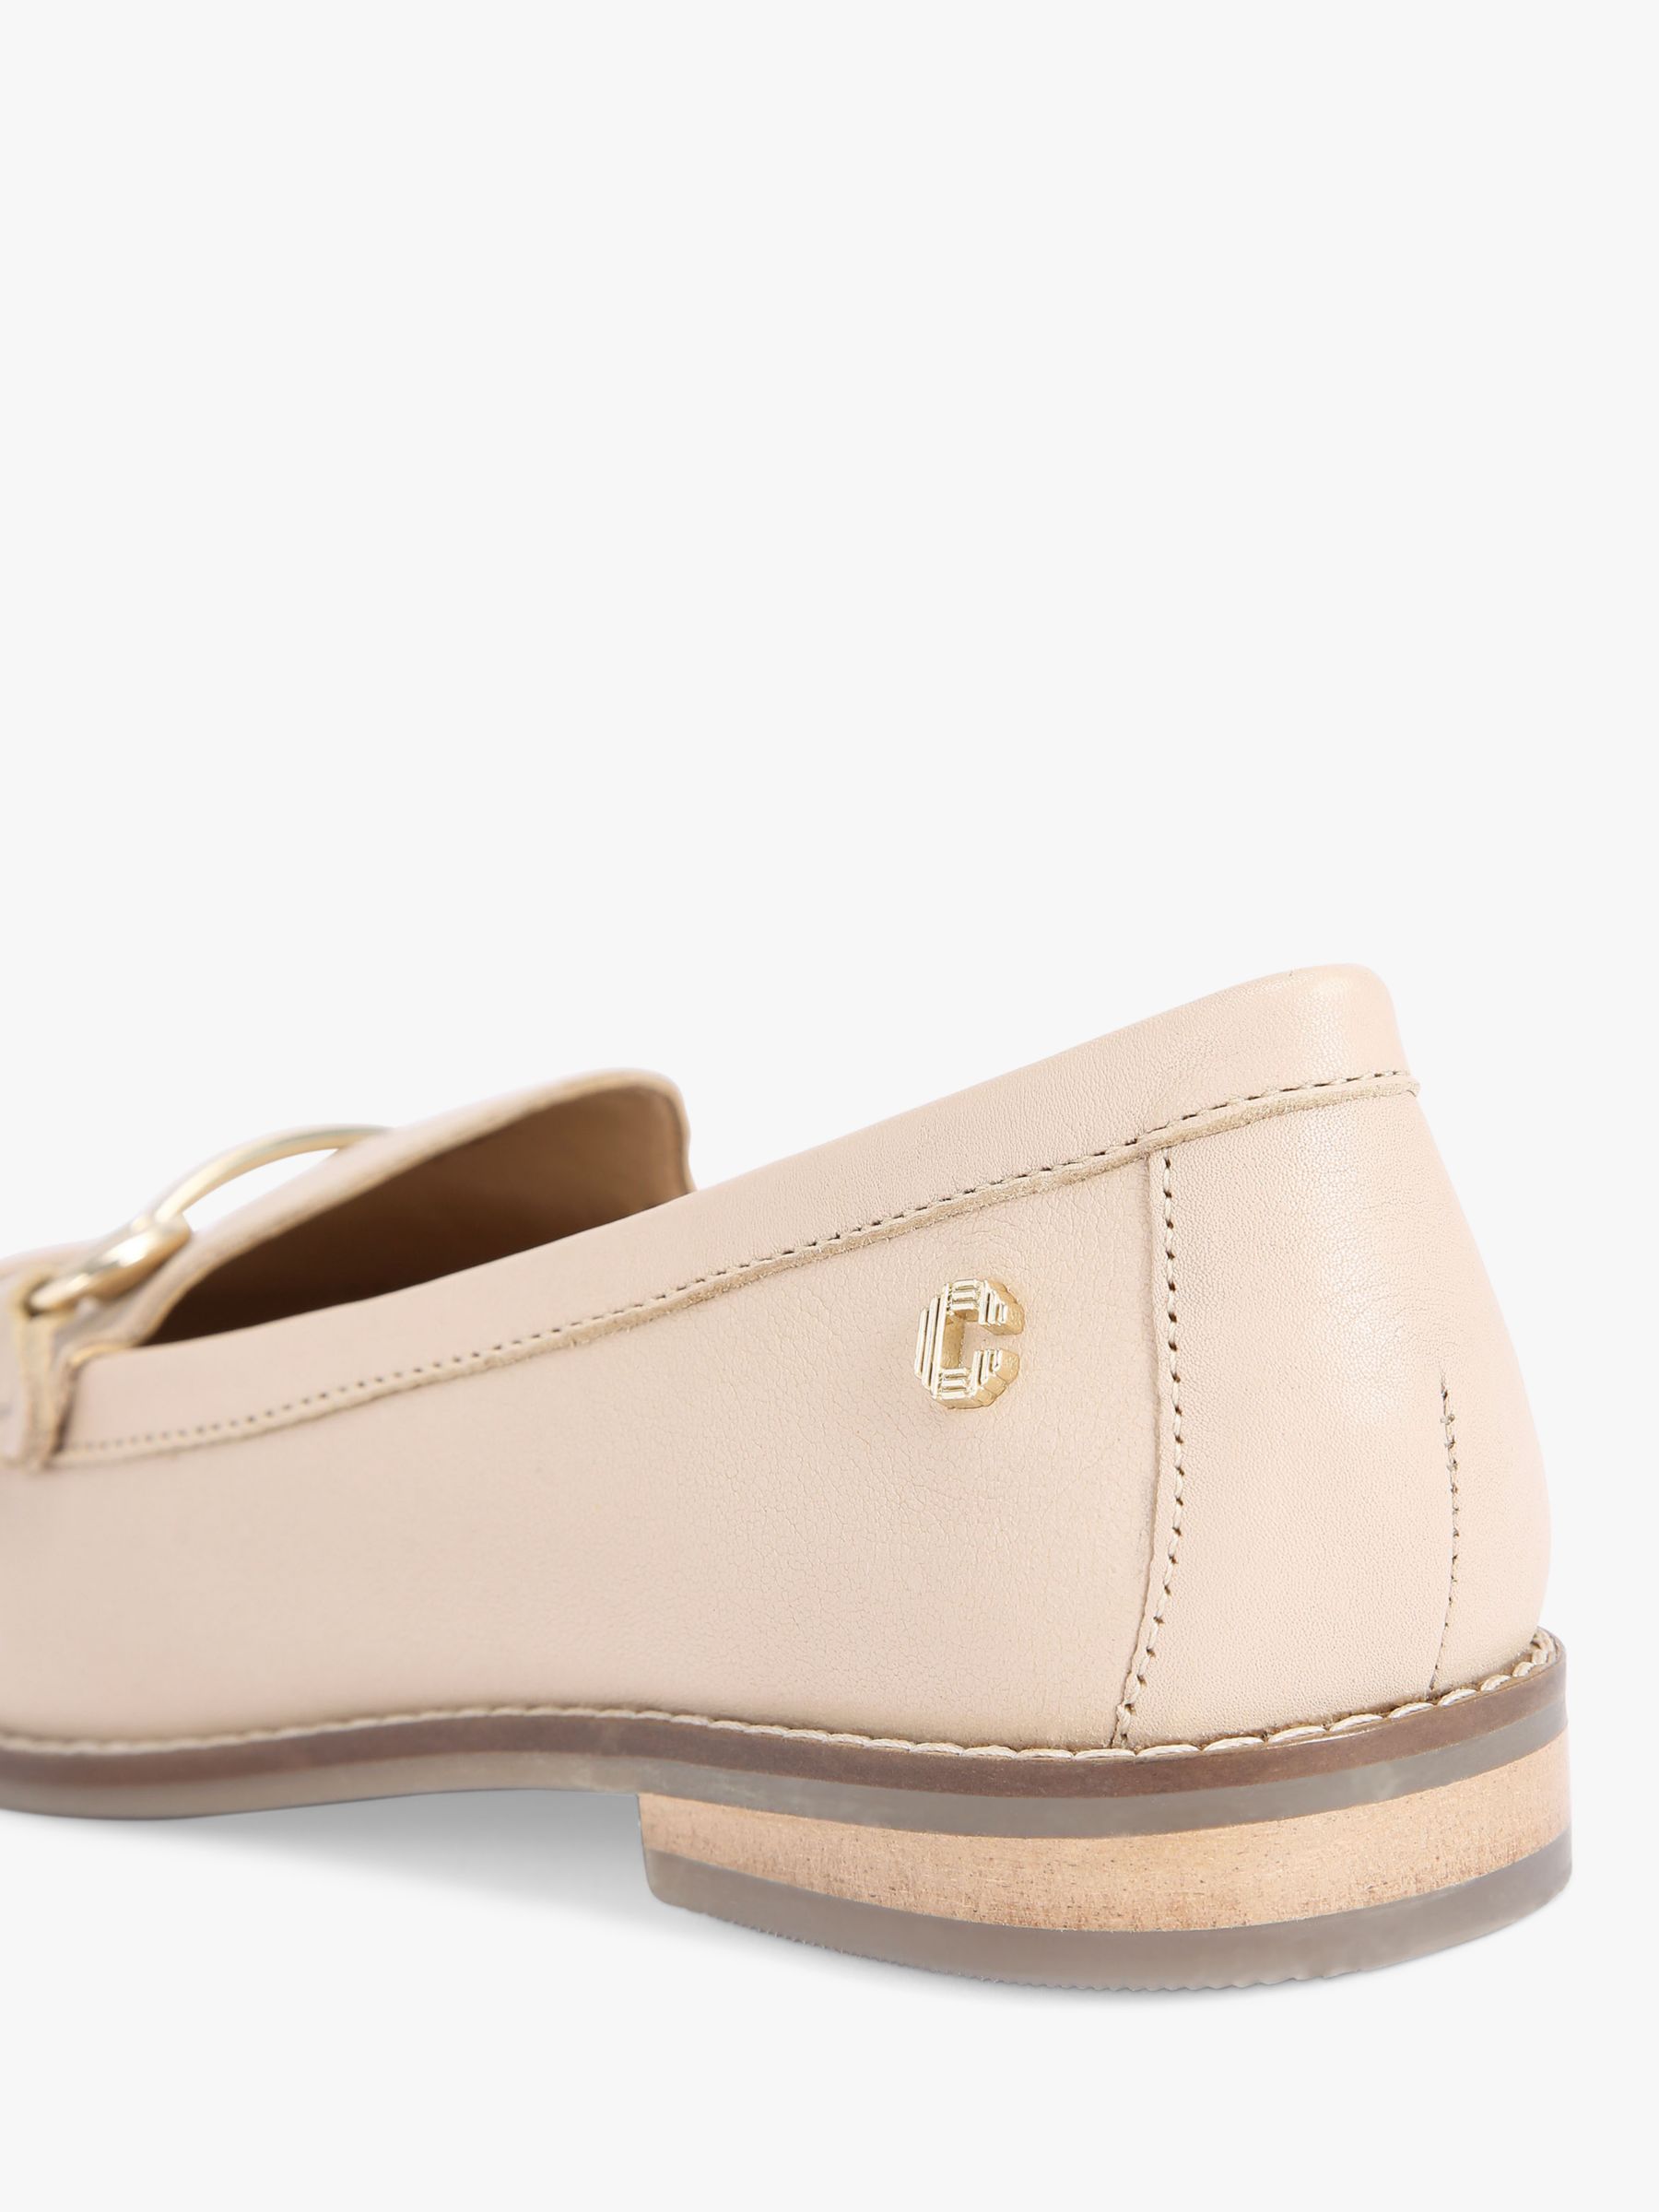 Carvela Snap Leather Loafers, Pink Blush, 7